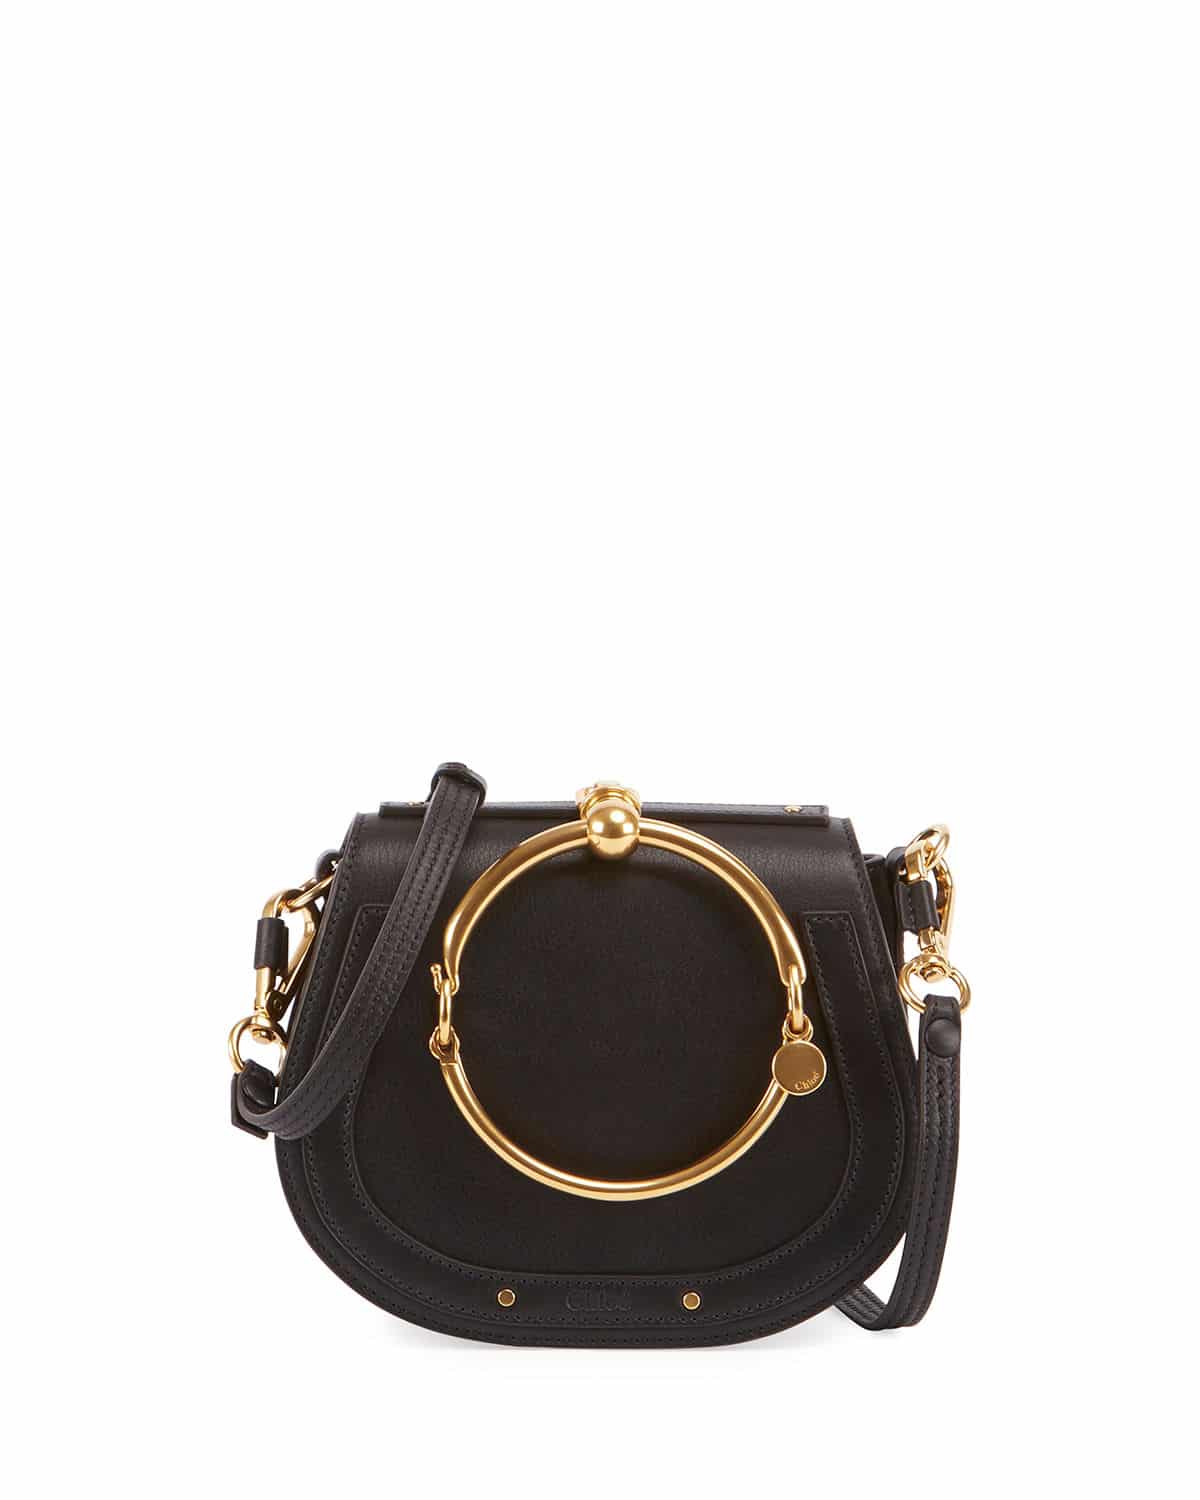 Chloé's Nile Bracelet Handbag Is The Hottest 'It' Bag of 2017